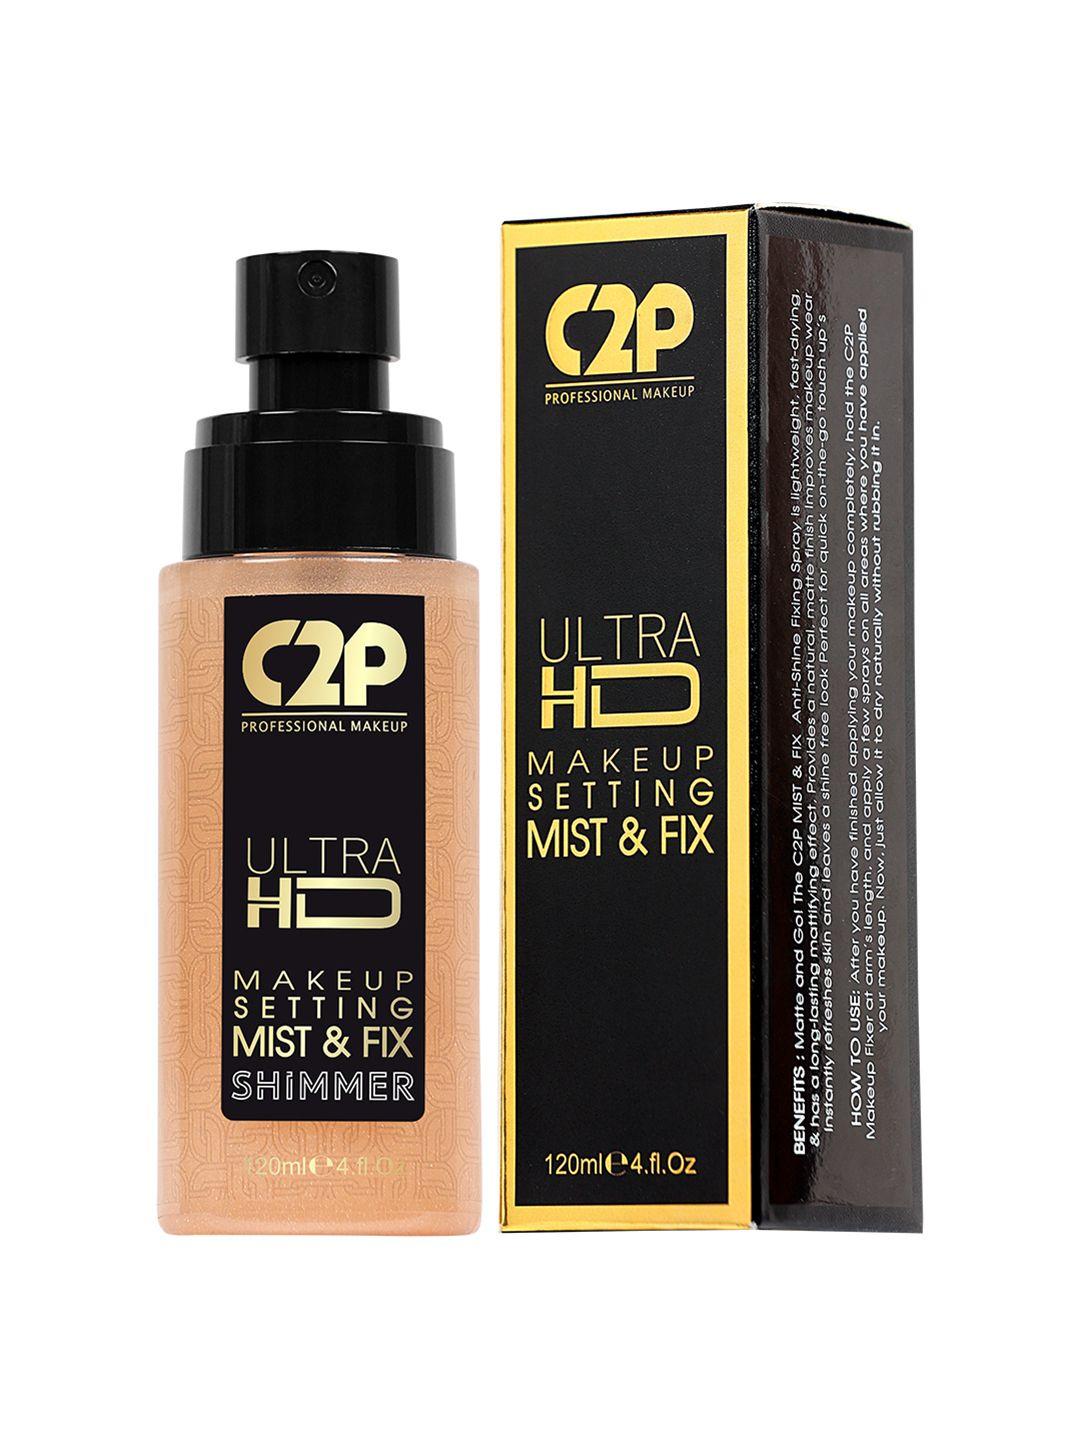 c2p professional makeup ultra hd makeup setting mist & fix - shimmer - rose gold retro 03